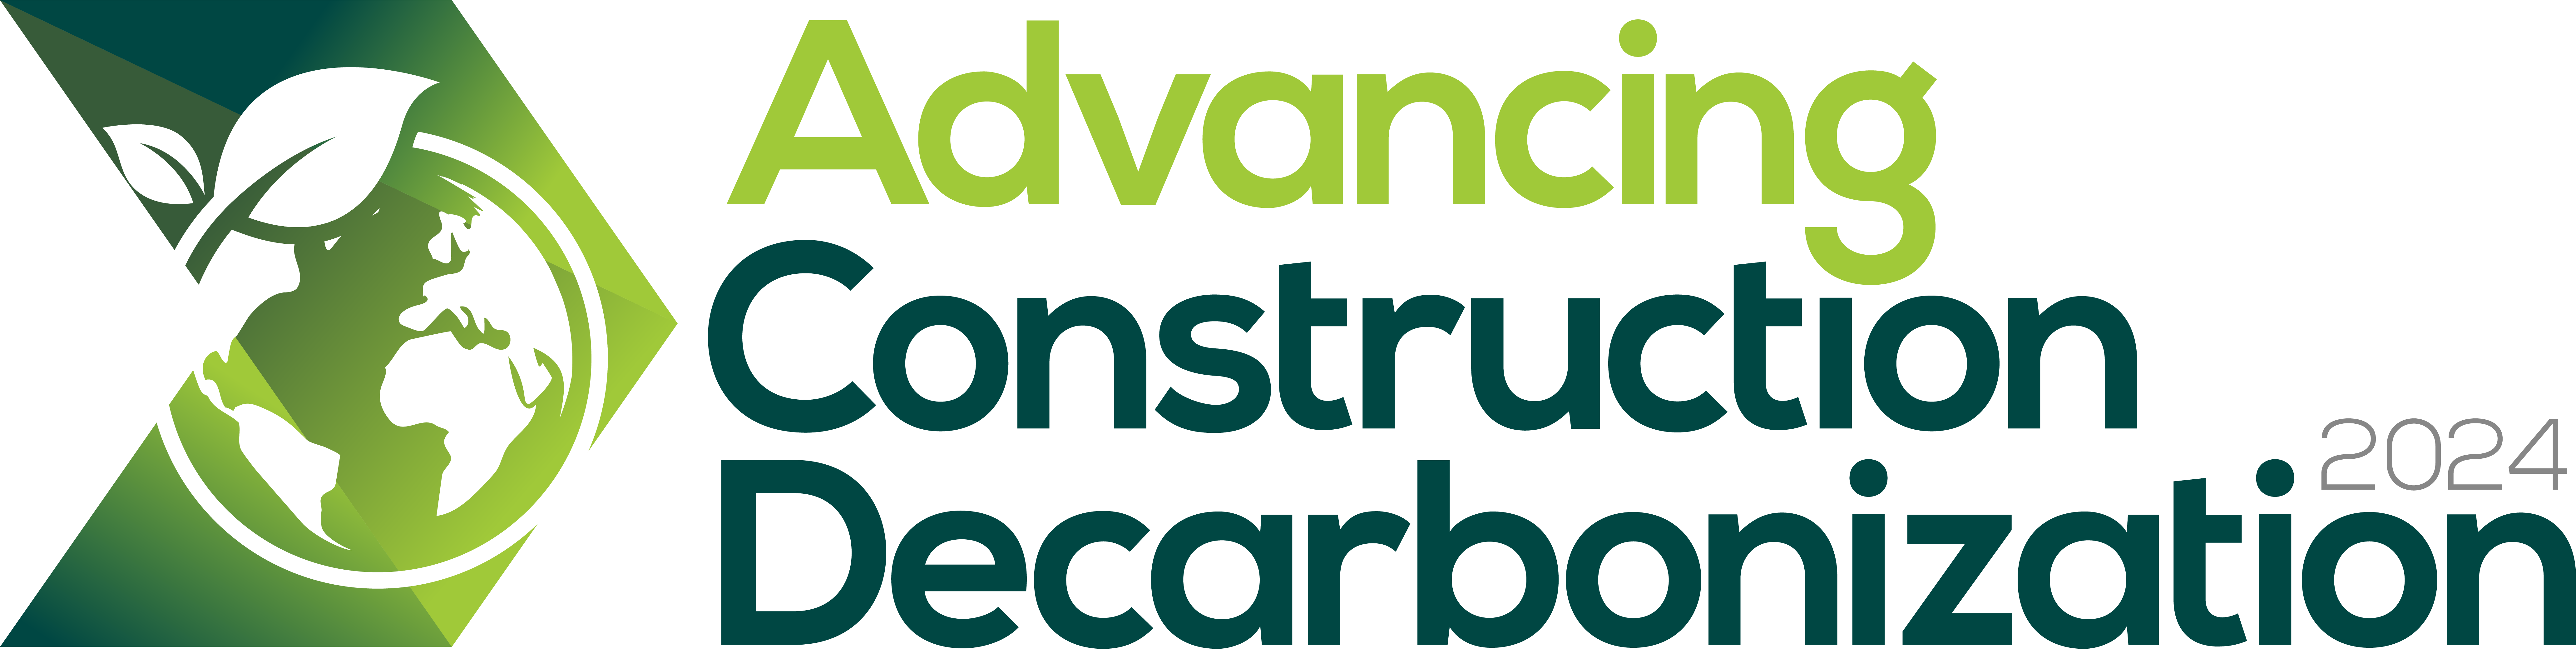 Advancing Construction Decarbonization Logo